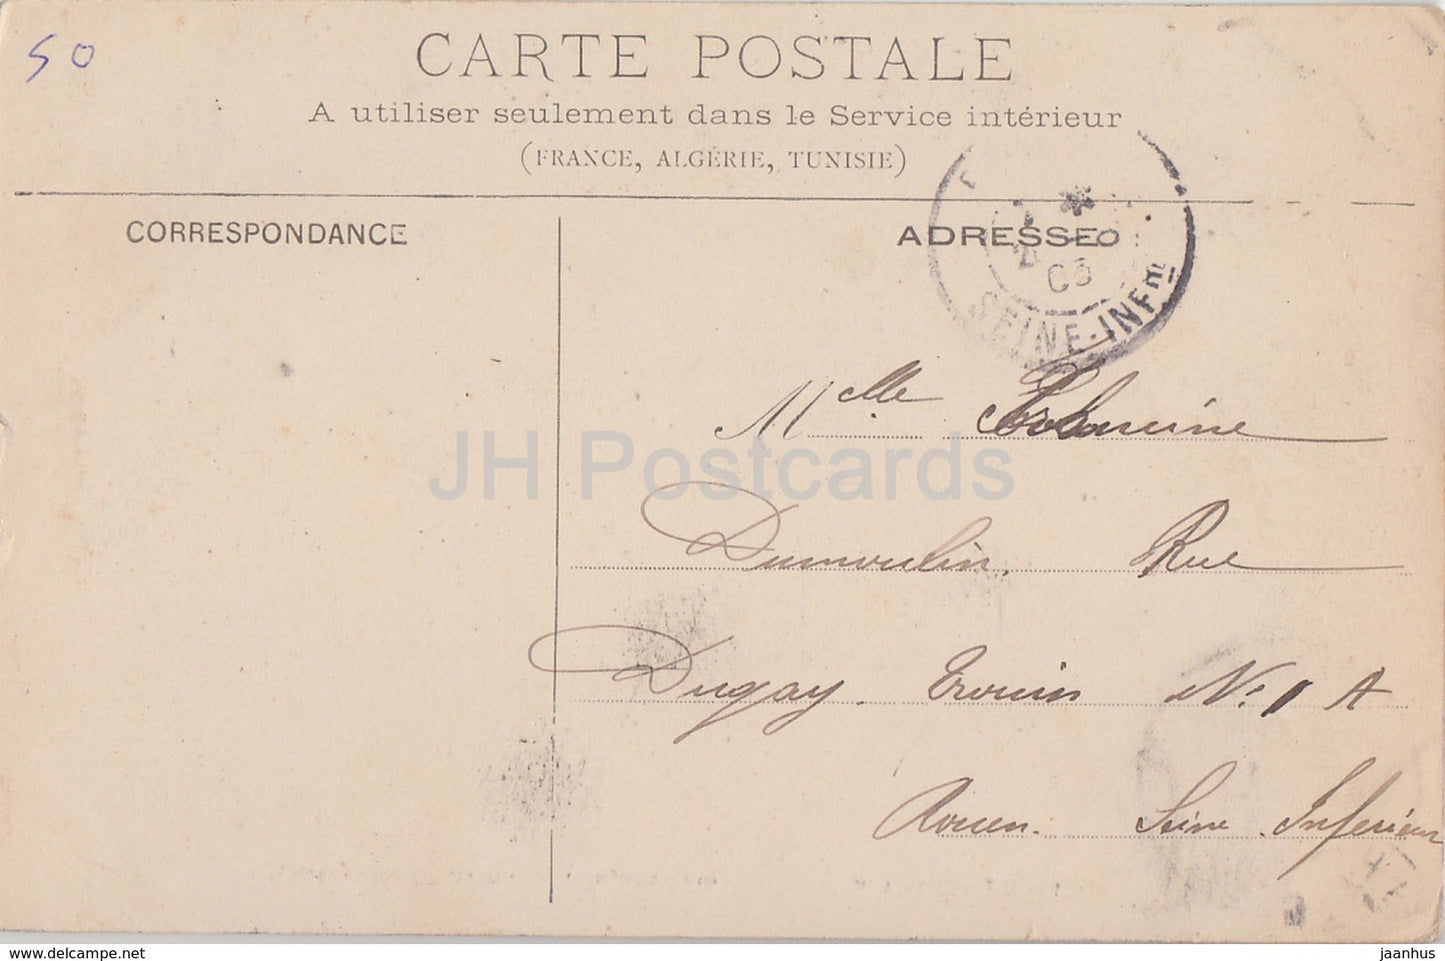 Chateau de Martinvast - Facade Sud - castle - old postcard - 1905 - France - used